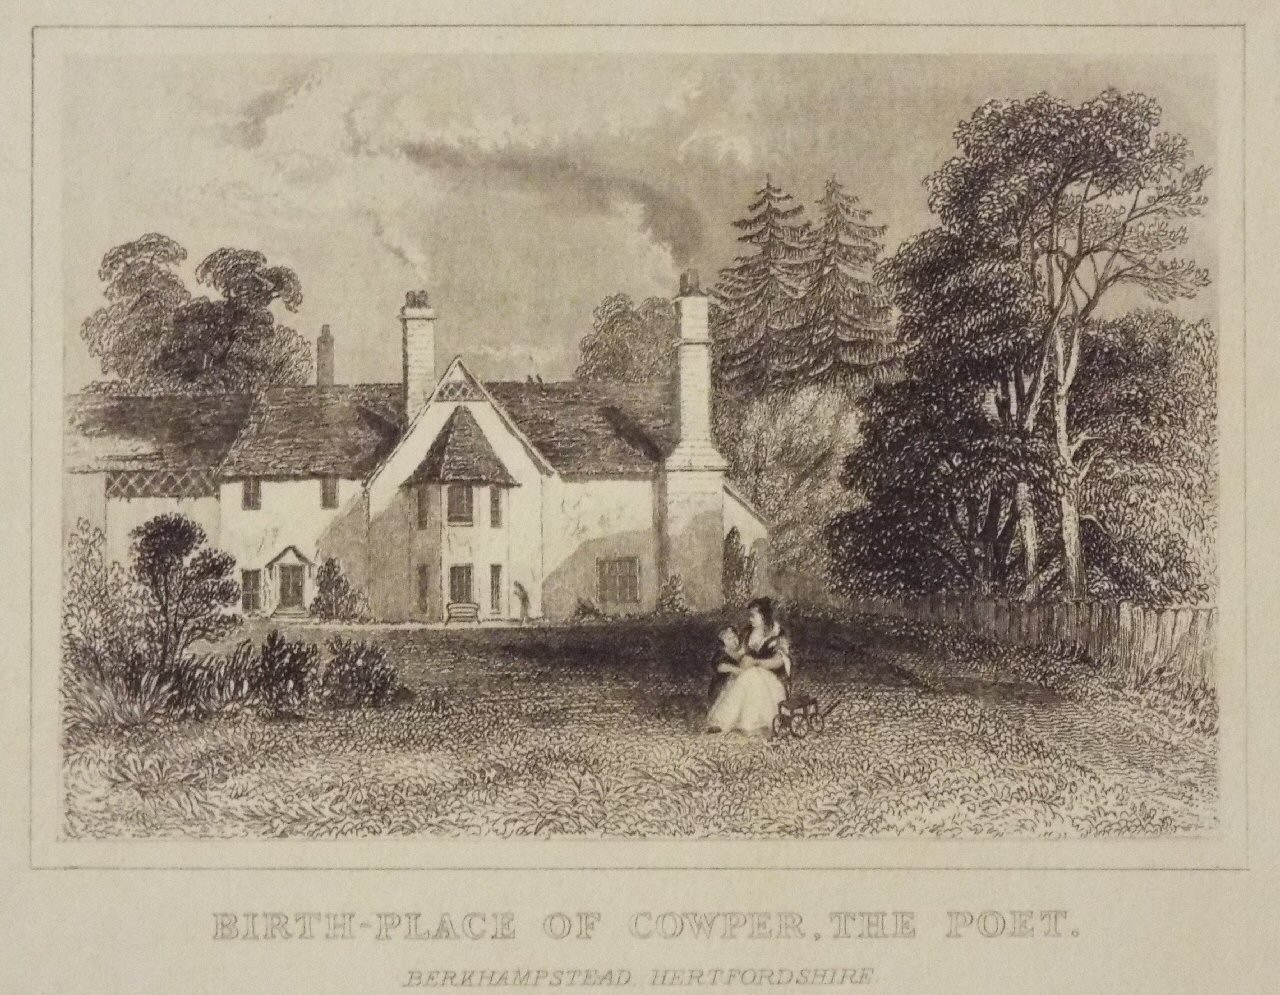 Print - Birth-Place of Cowper, the Poet. Berkhampstead, Hertfordshire.